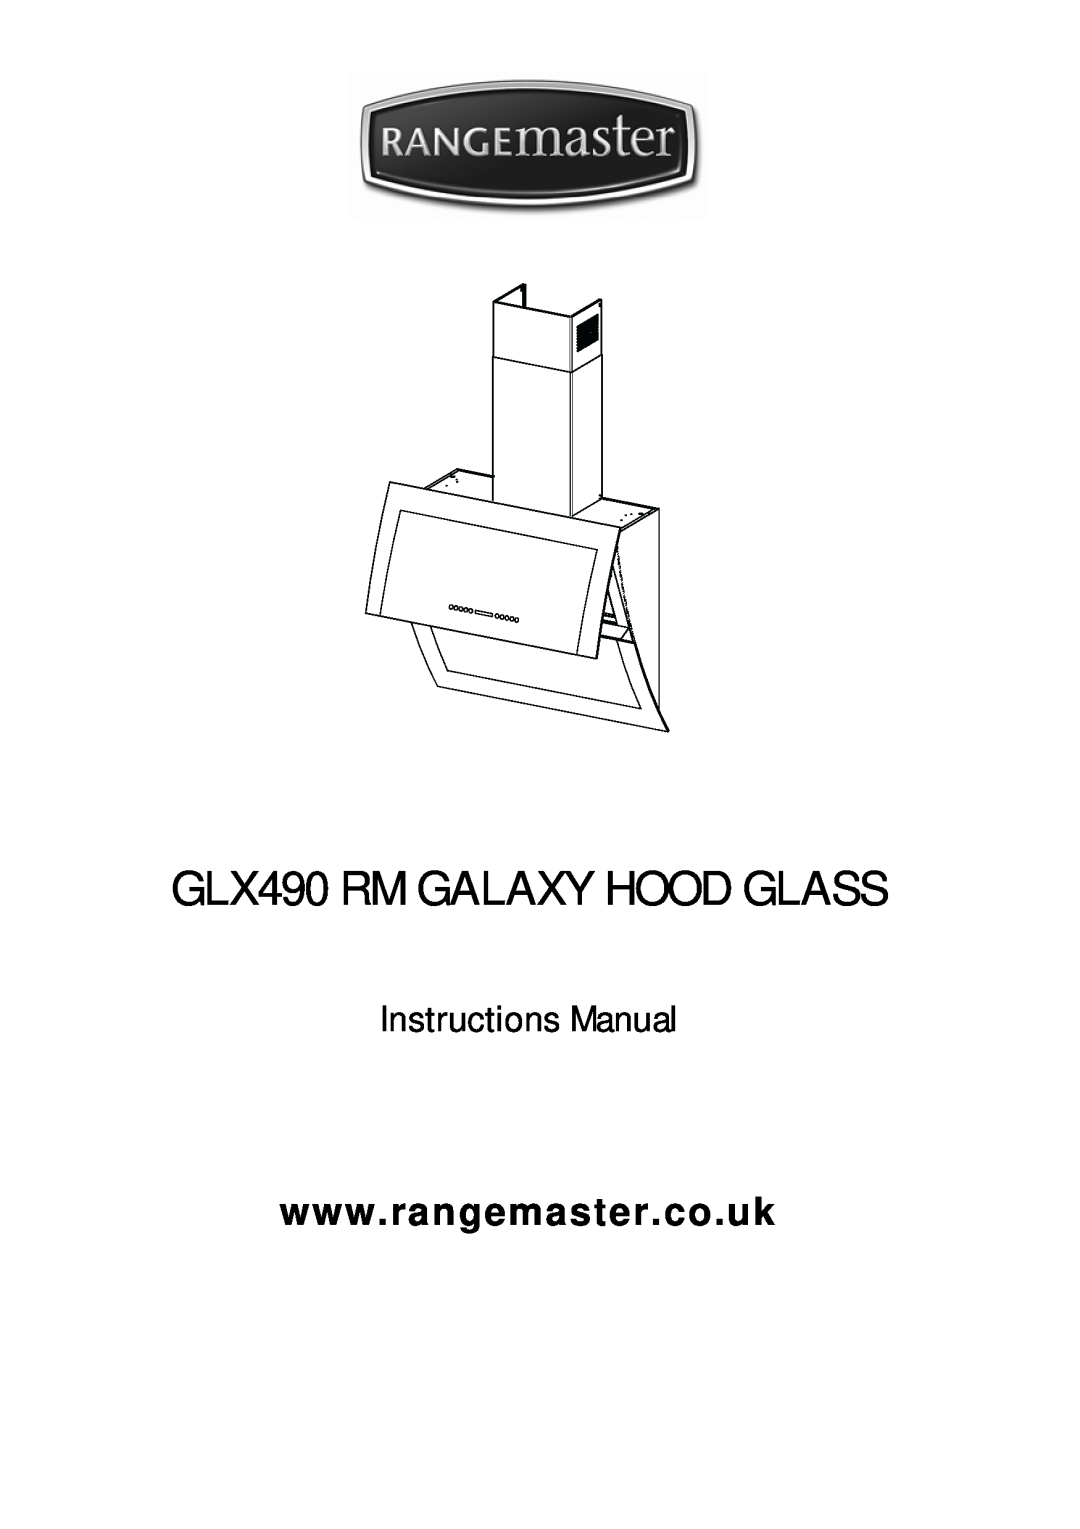 Rangemaster manual Instructions Manual, GLX490 RM GALAXY HOOD GLASS 